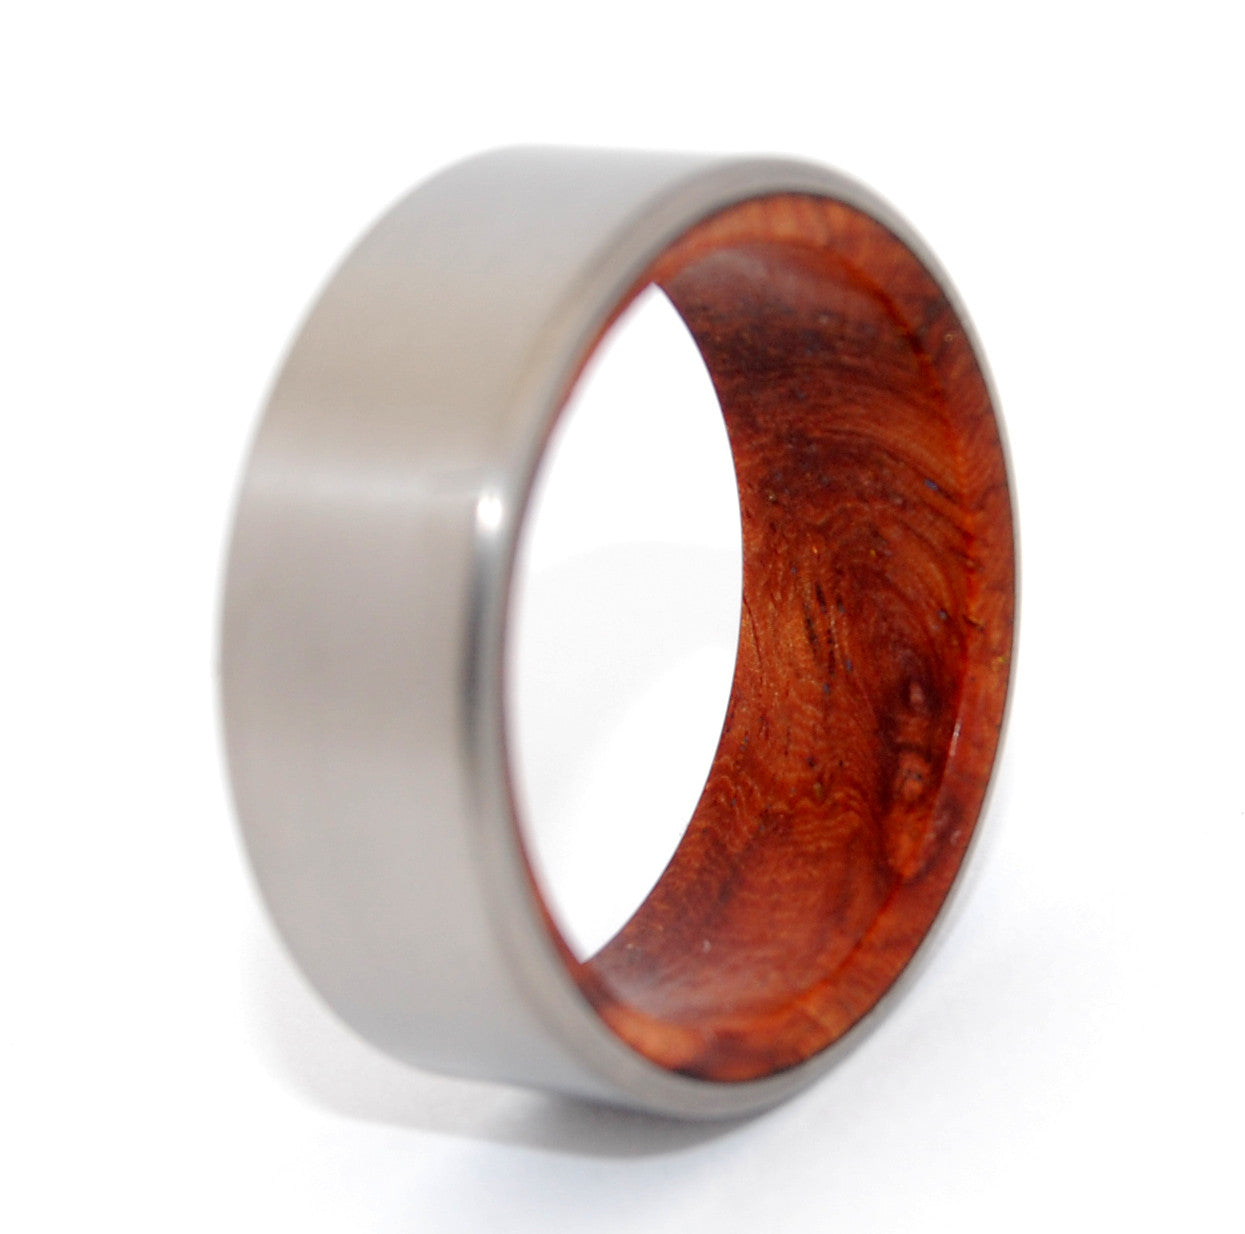 SANCTUM | Amboyna Burl Wood & Titanium - Wooden Wedding Rings - Minter and Richter Designs